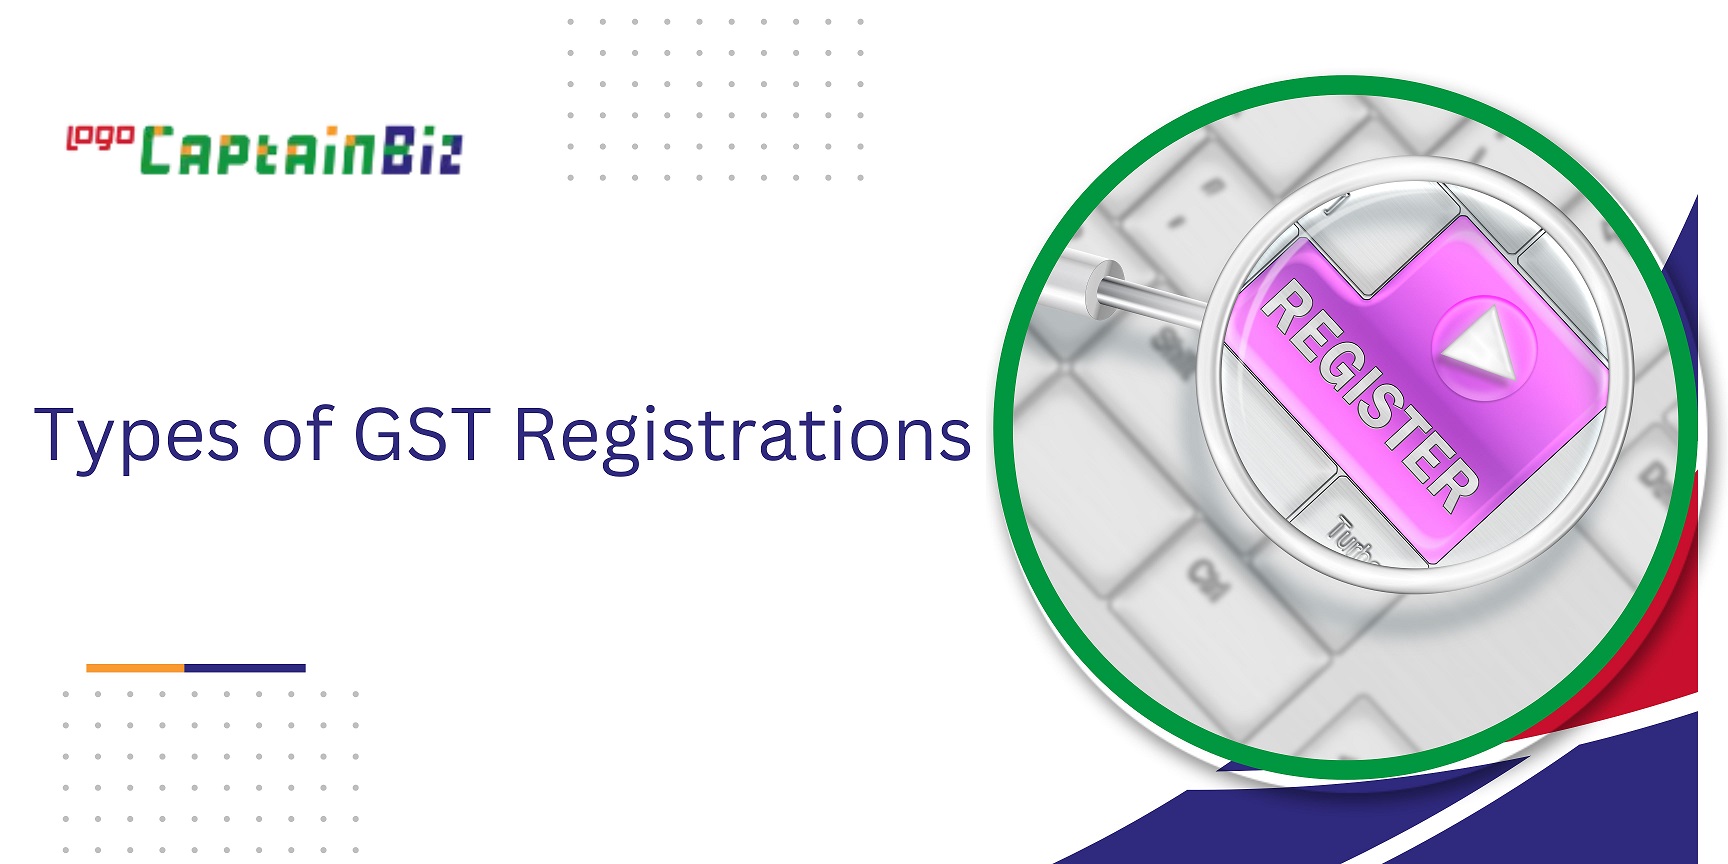 CaptainBiz: Types of GST Registrations